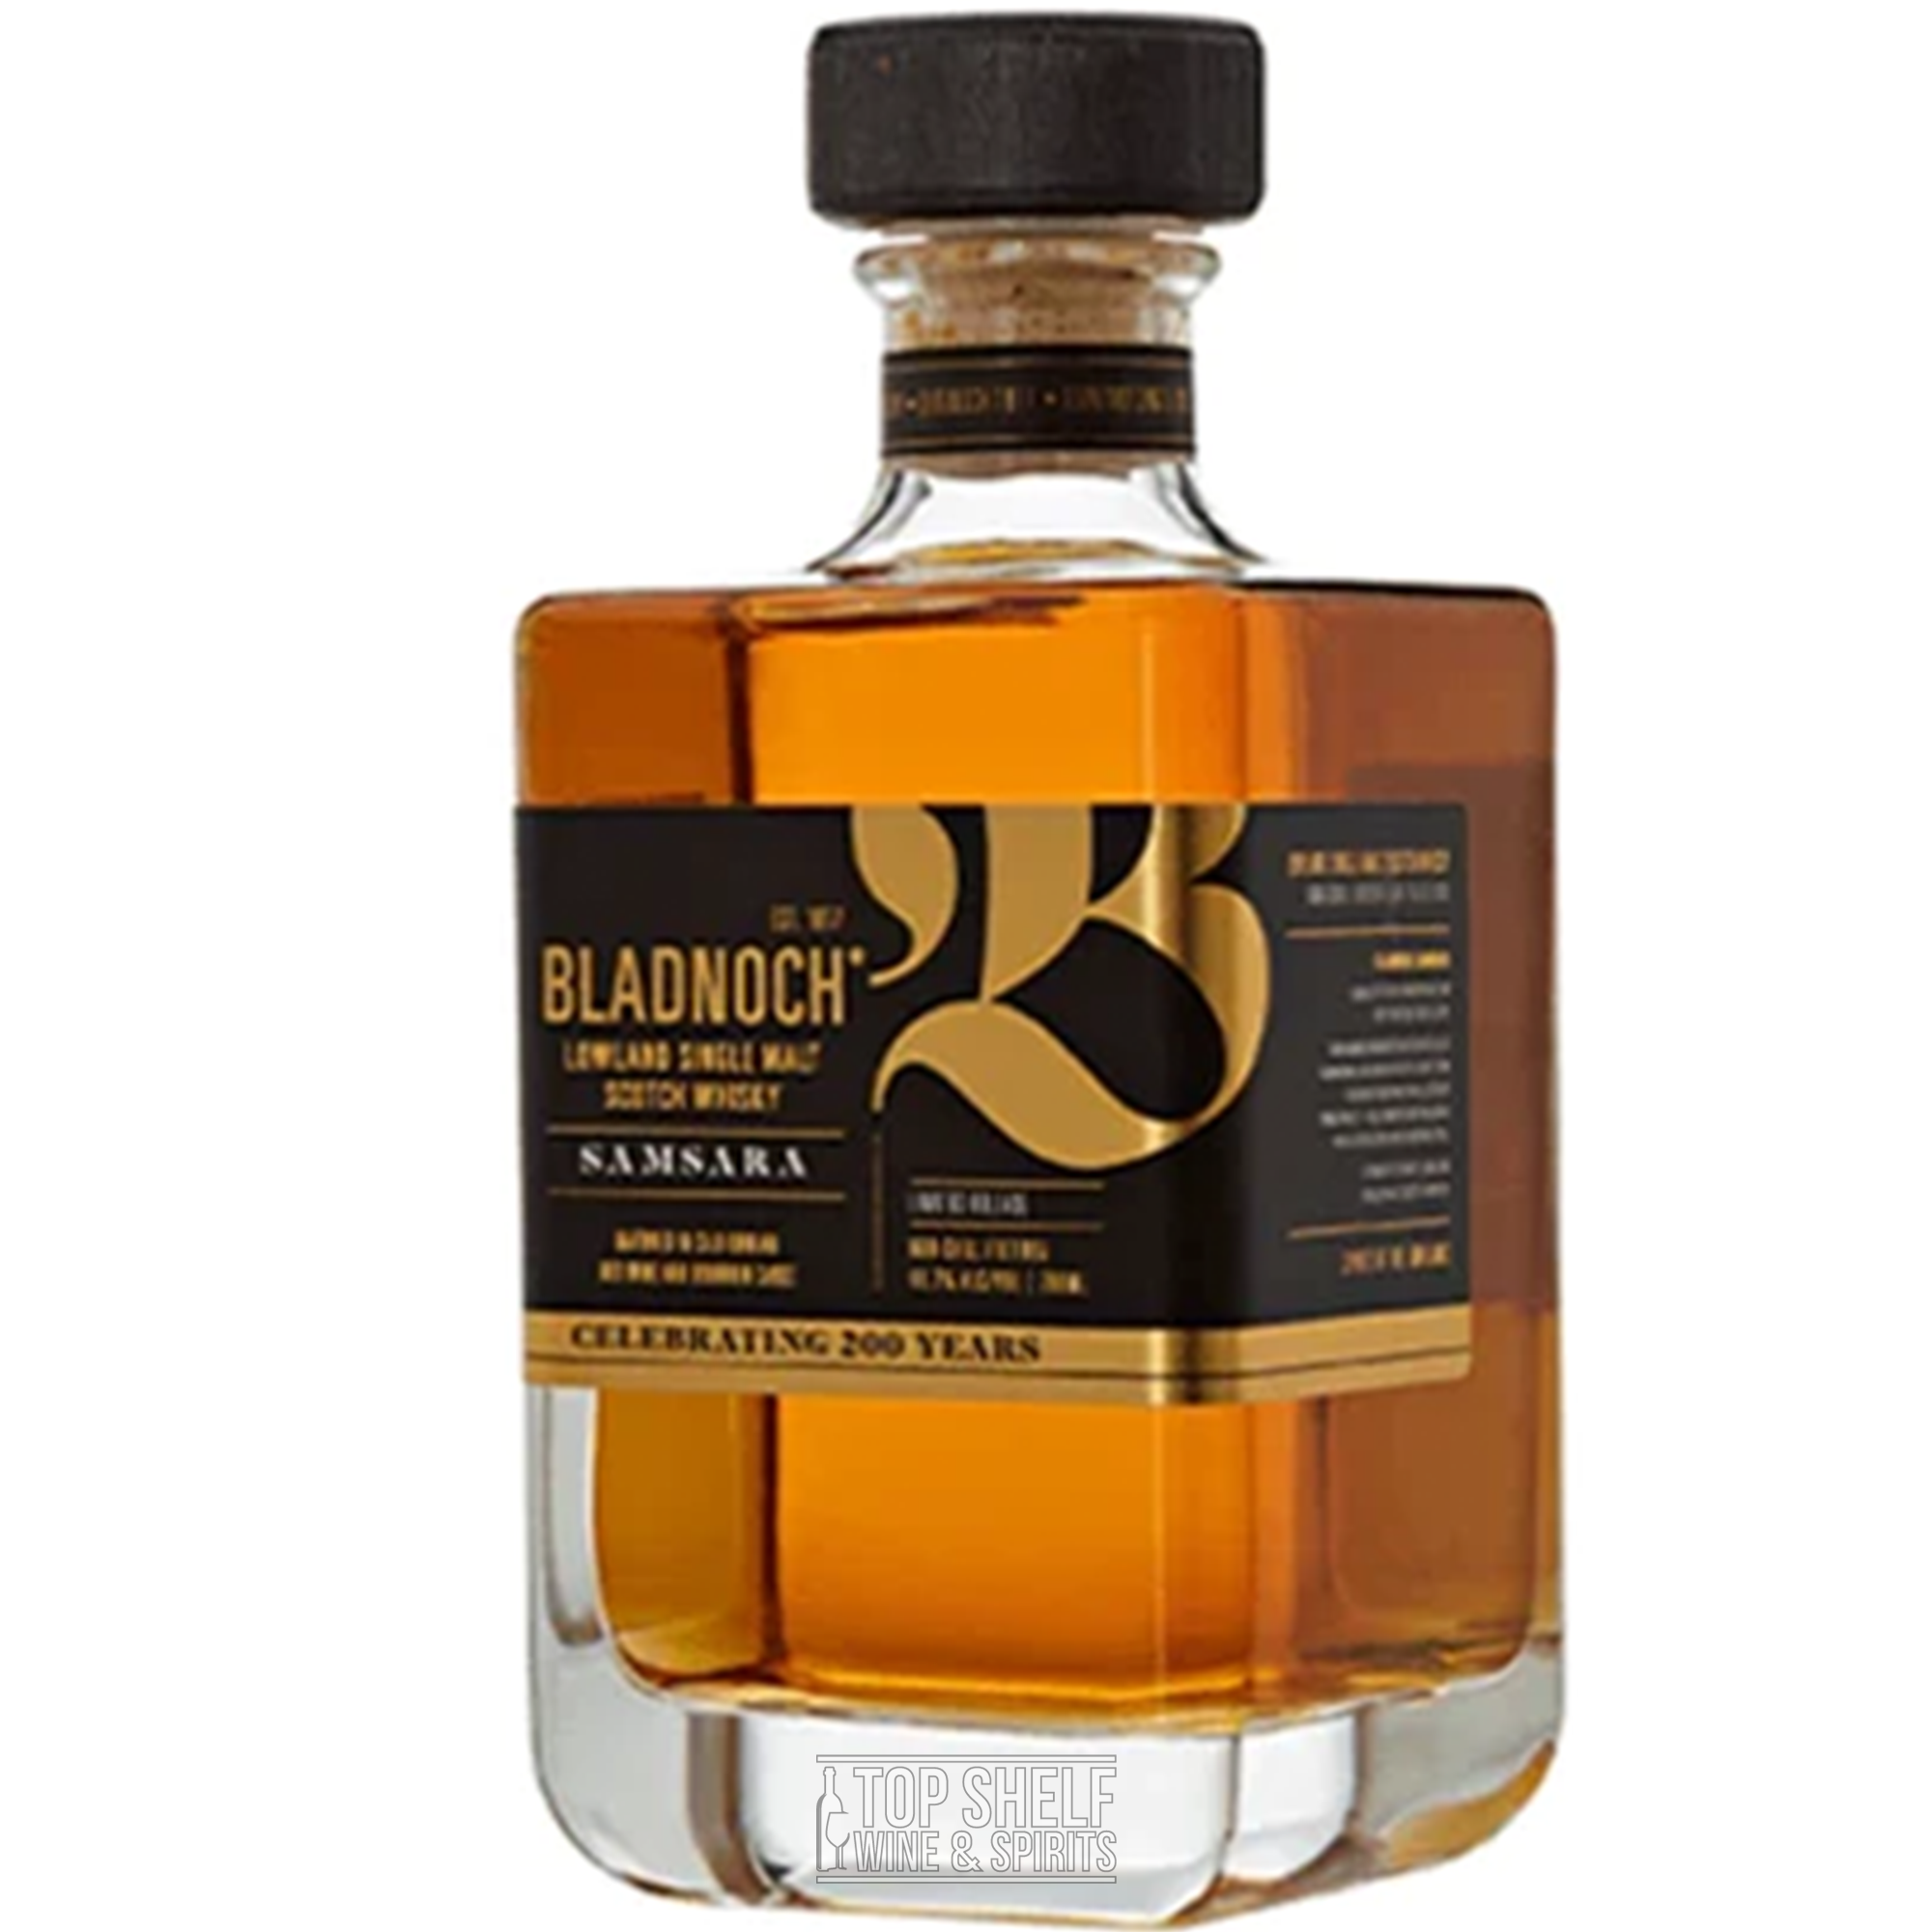 Bladnoch Samsara Single Malt Scotch